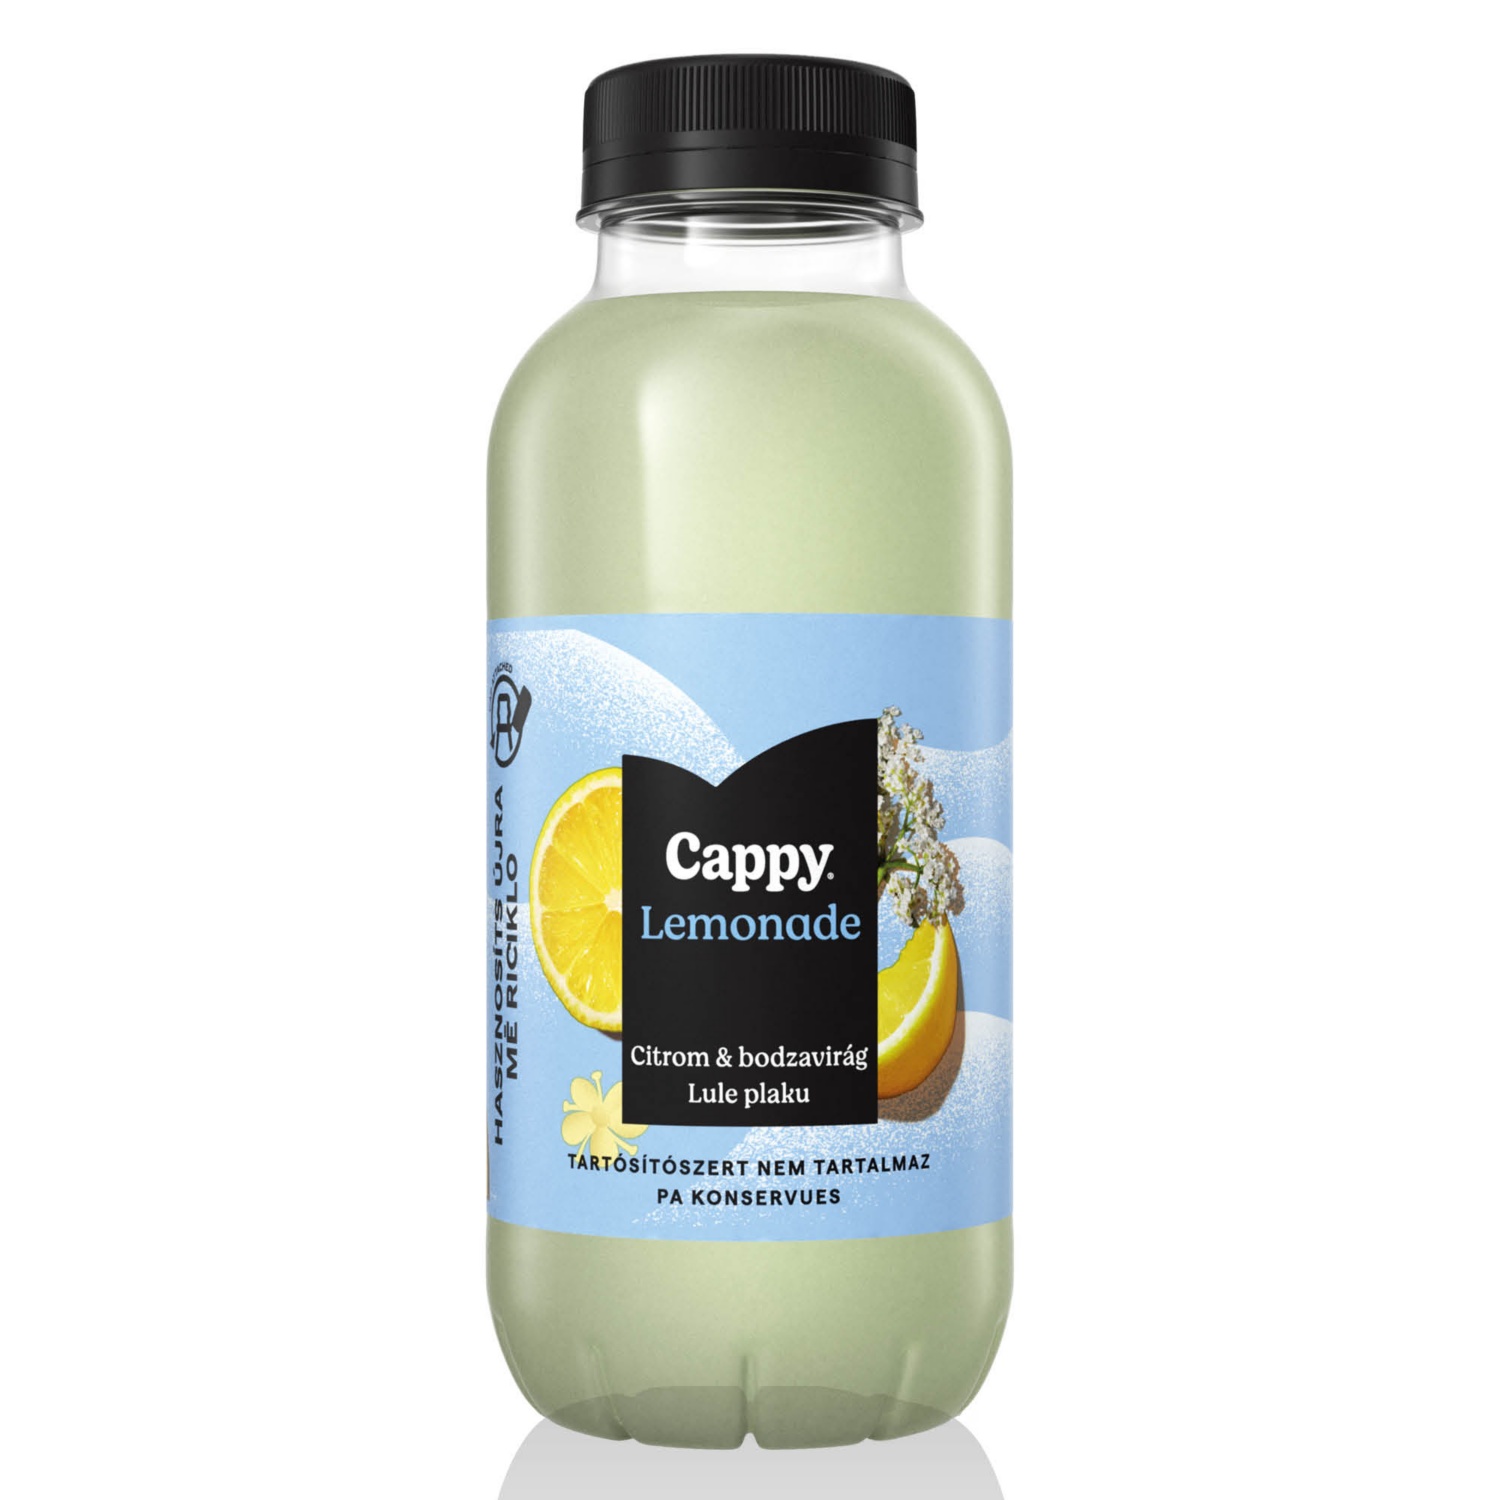 CAPPY Limonádé, 0,4 l, citrom-bodzavirág